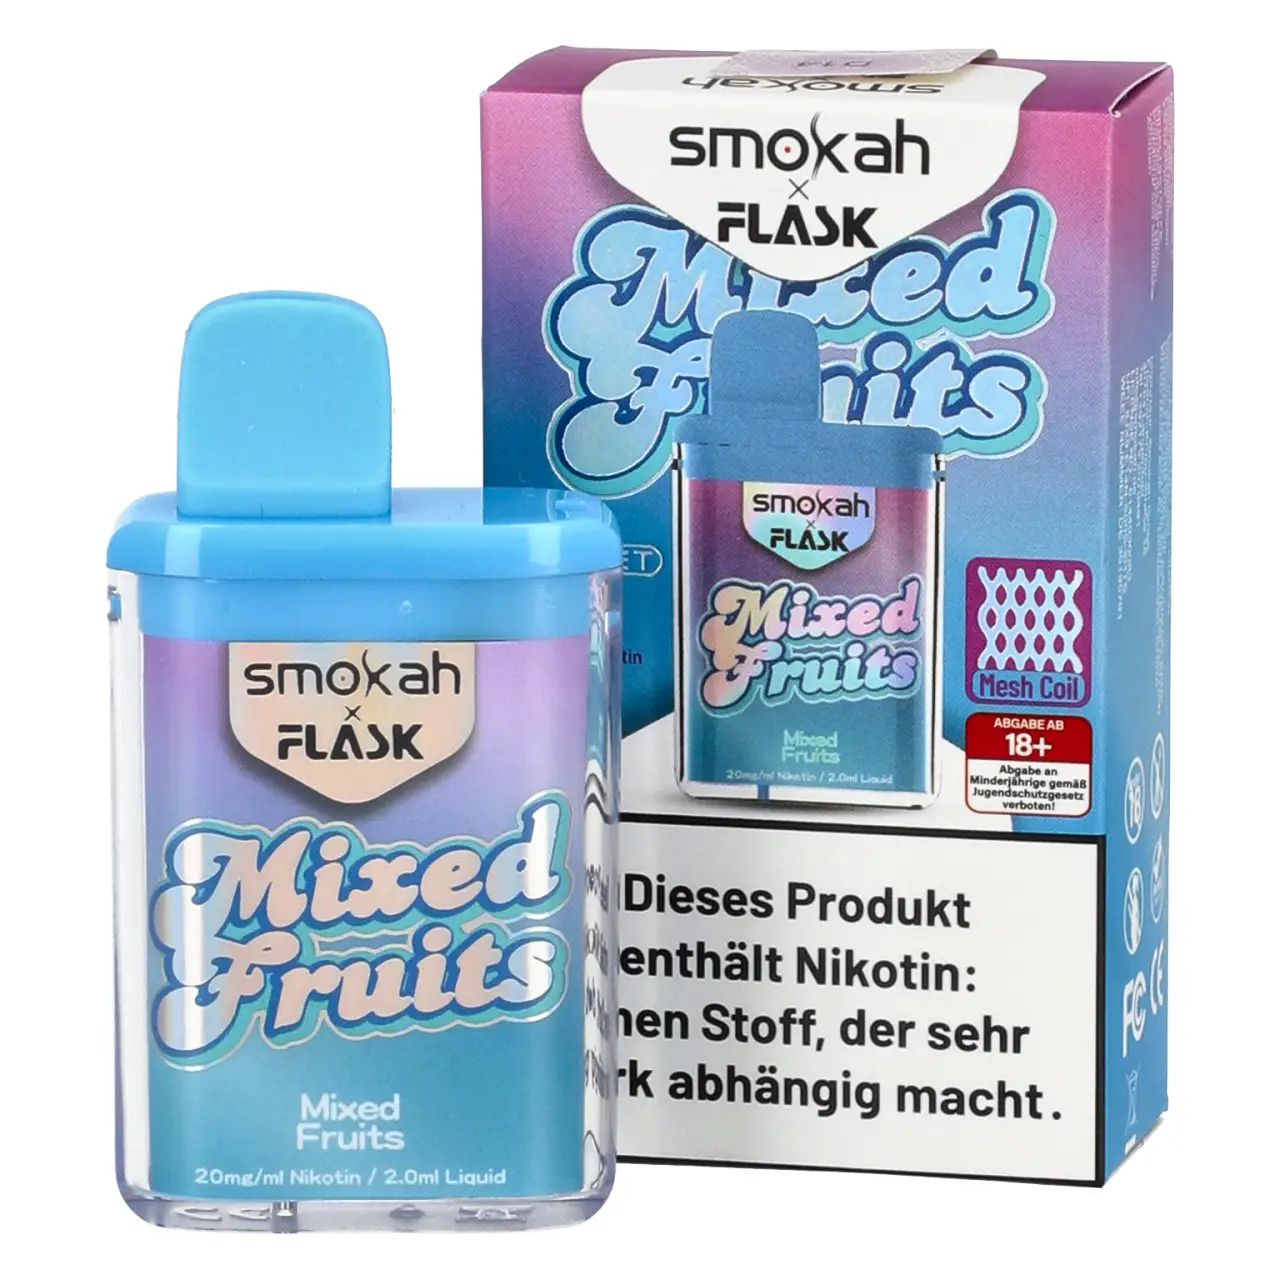 Mixed Fruits - Smokah x Flask Pocket Einweg Vape